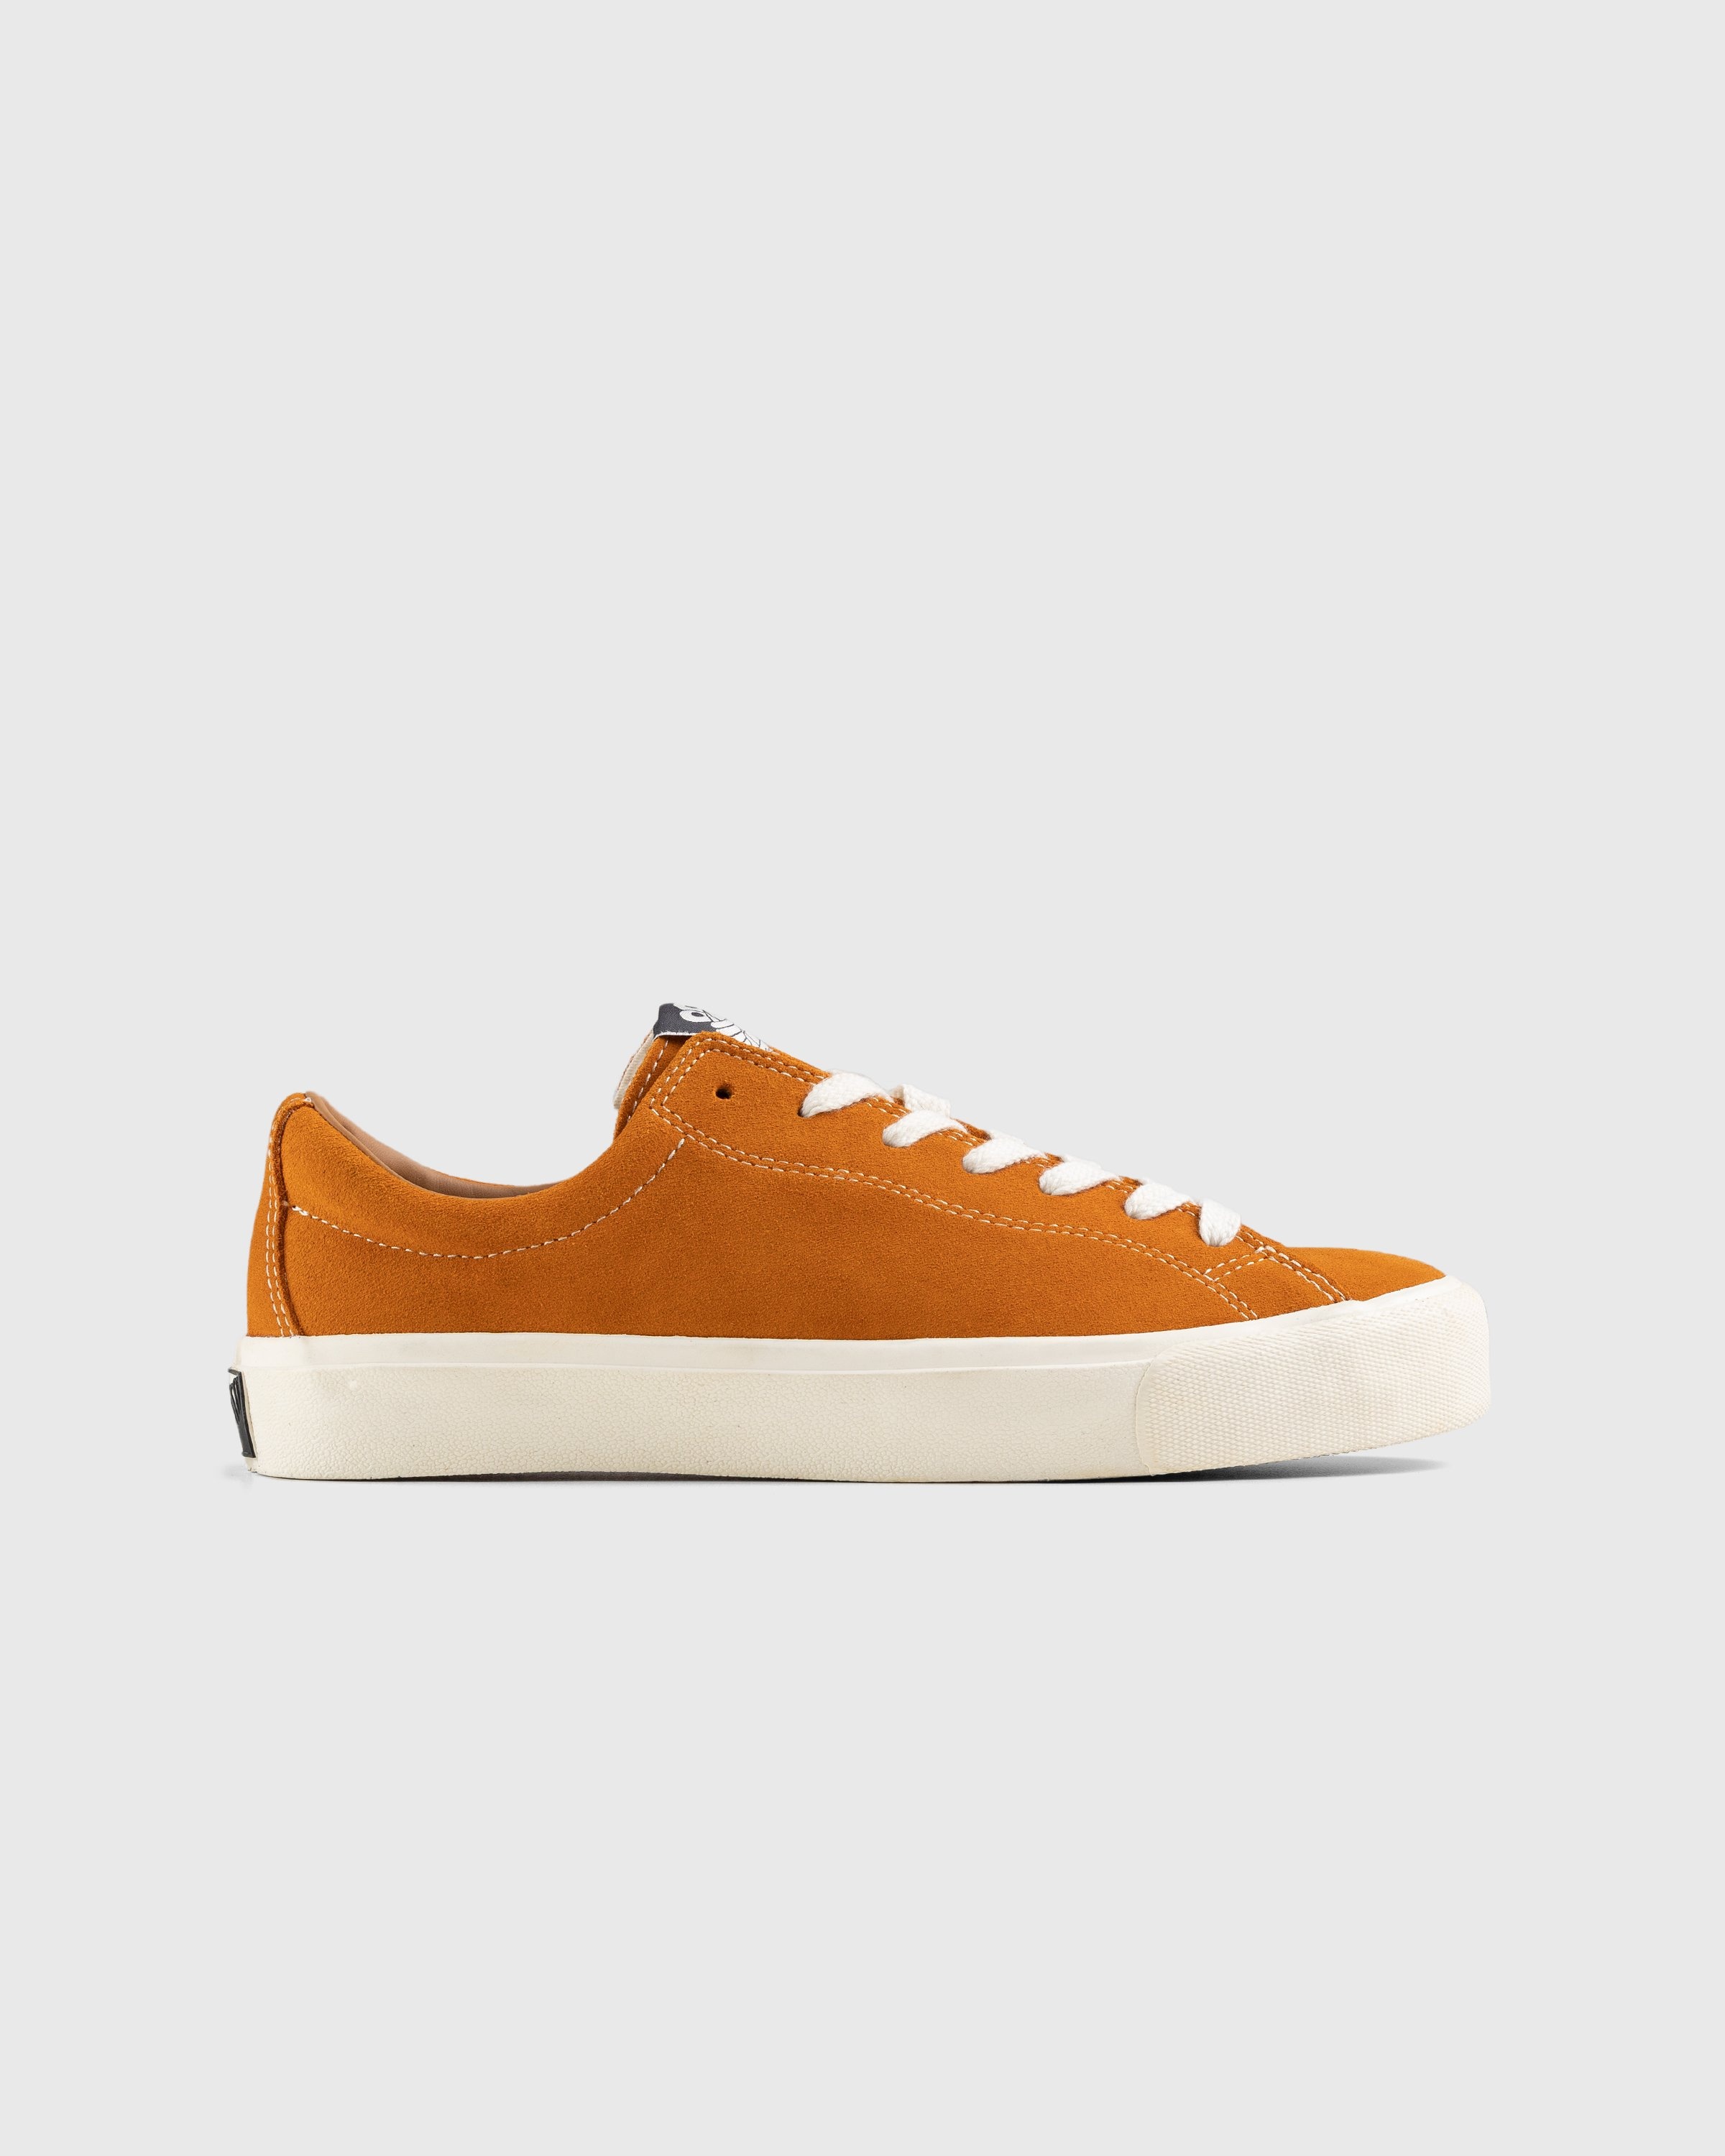 Last Resort AB – VM003 Suede Lo Cheddar/White - Low Top Sneakers - Orange - Image 1